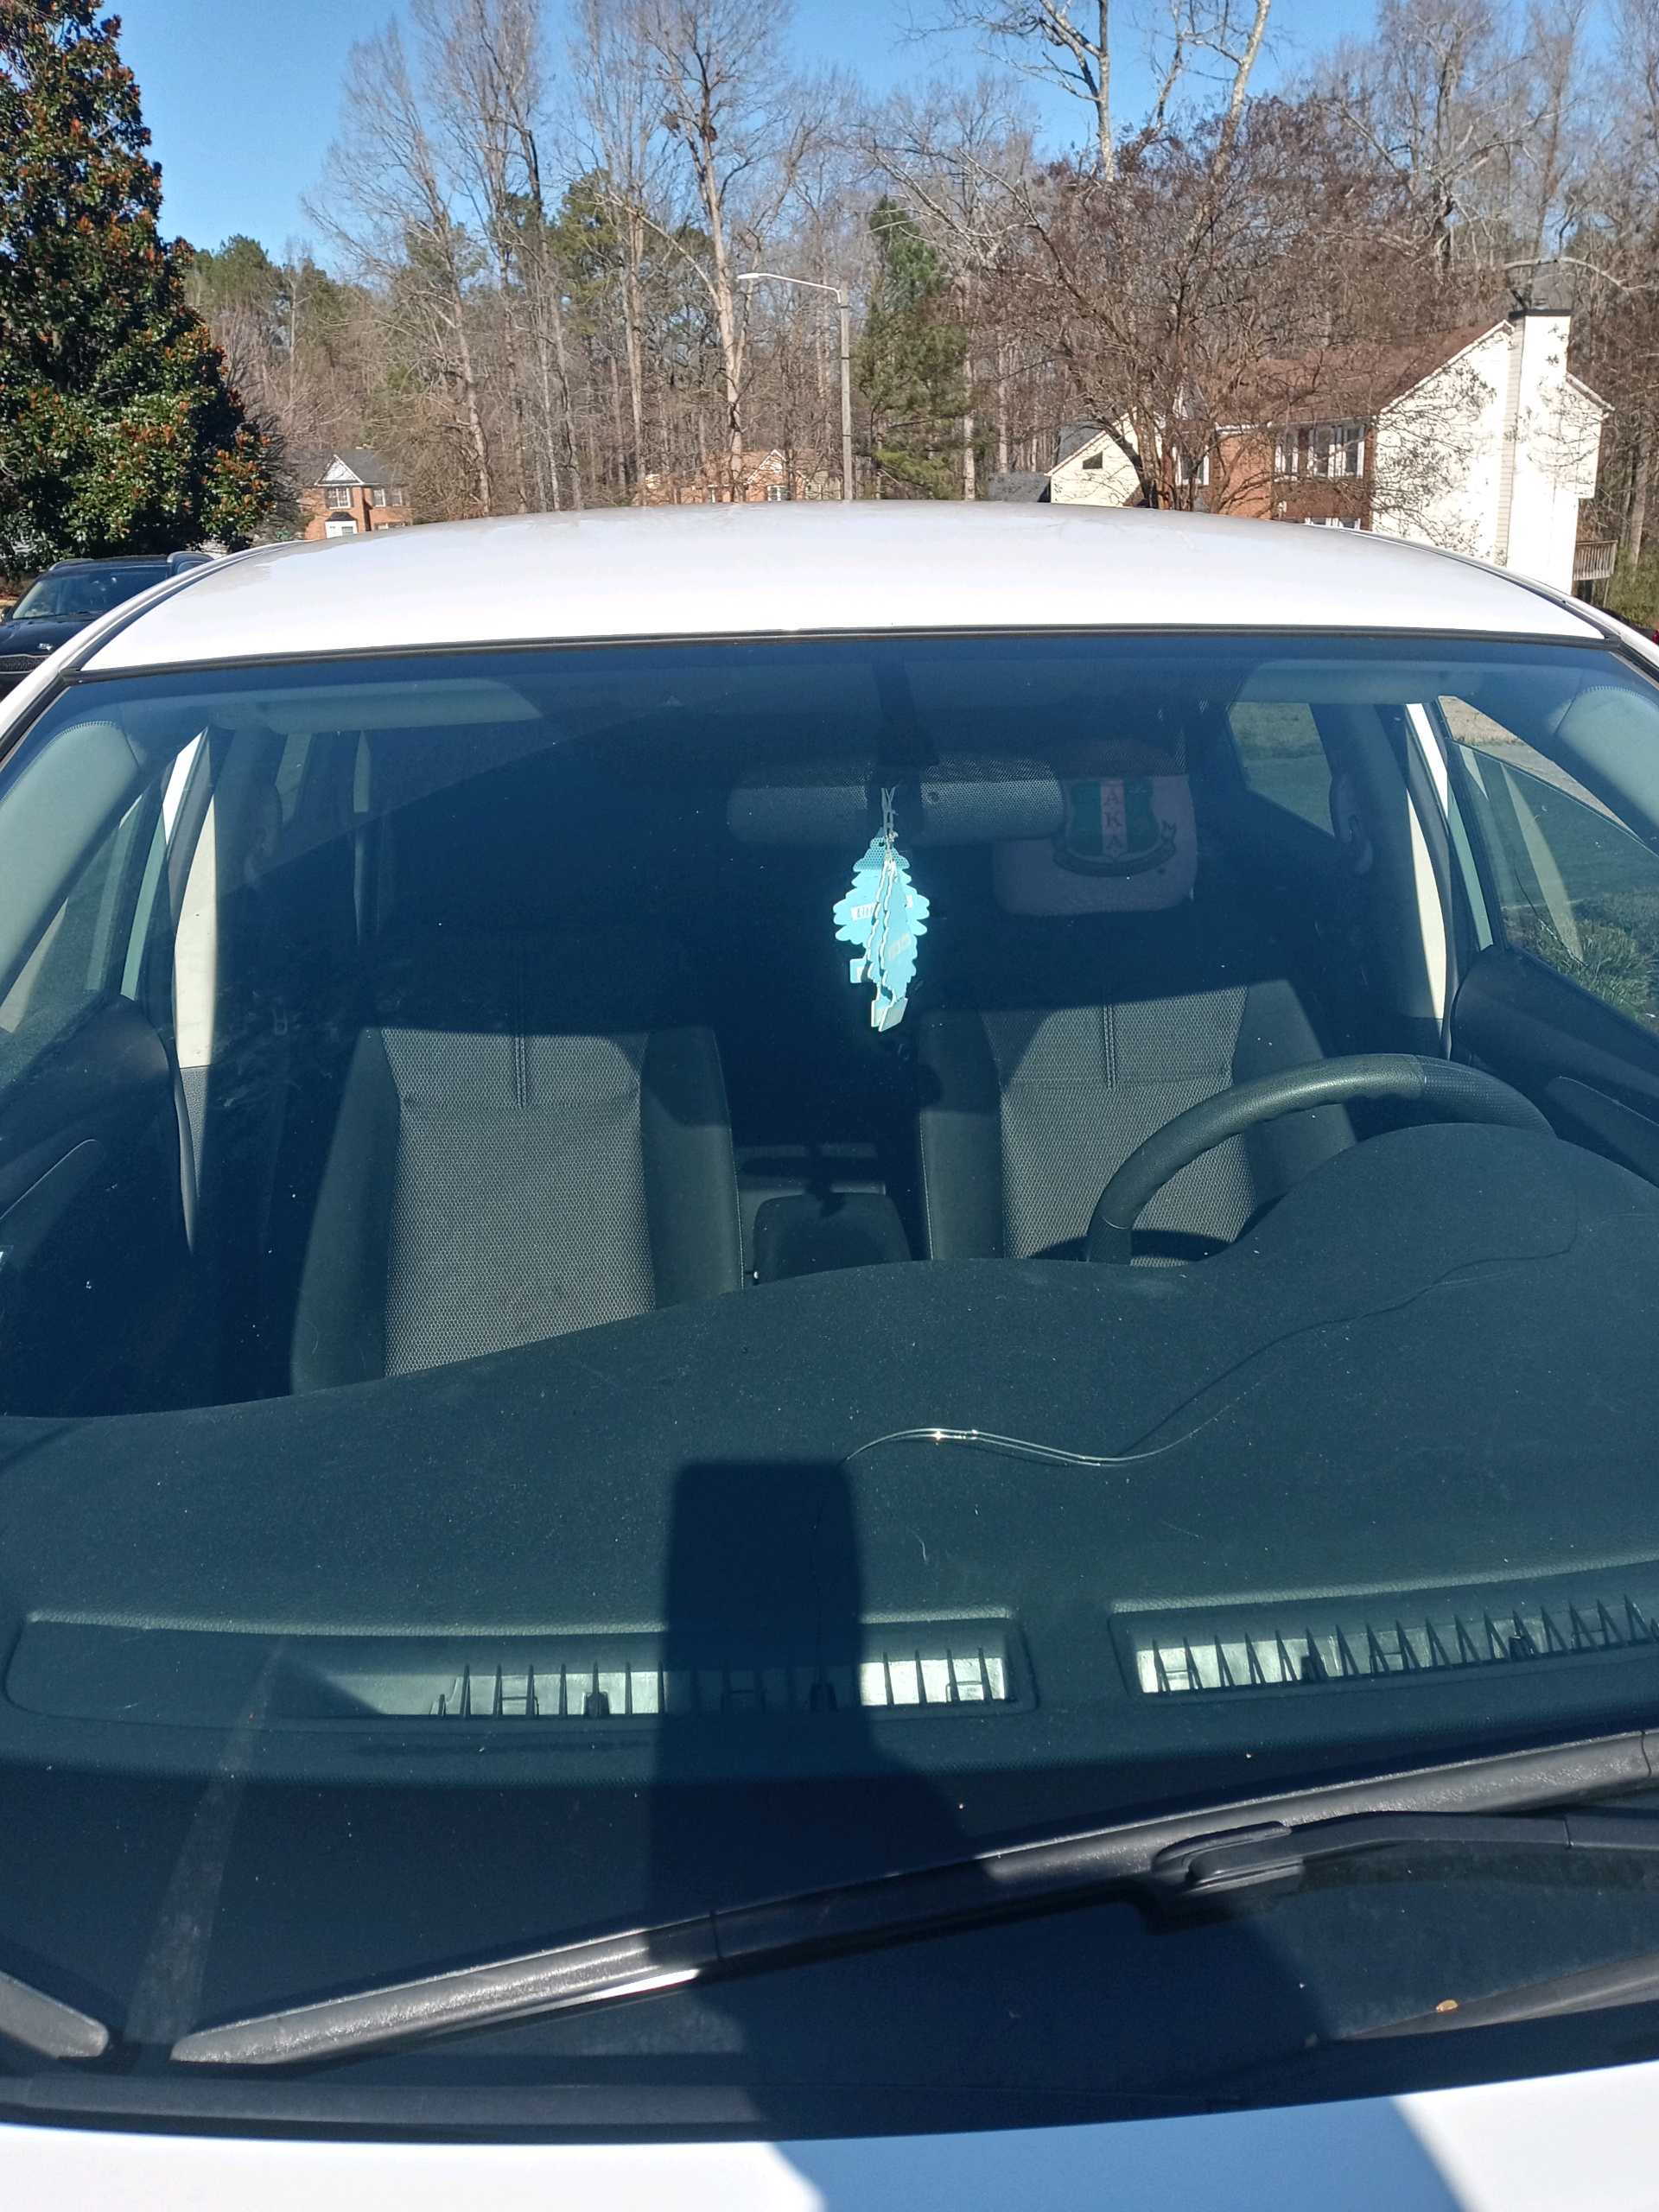 2019 Nissan Sentra broken windshield in Johns Creek GA